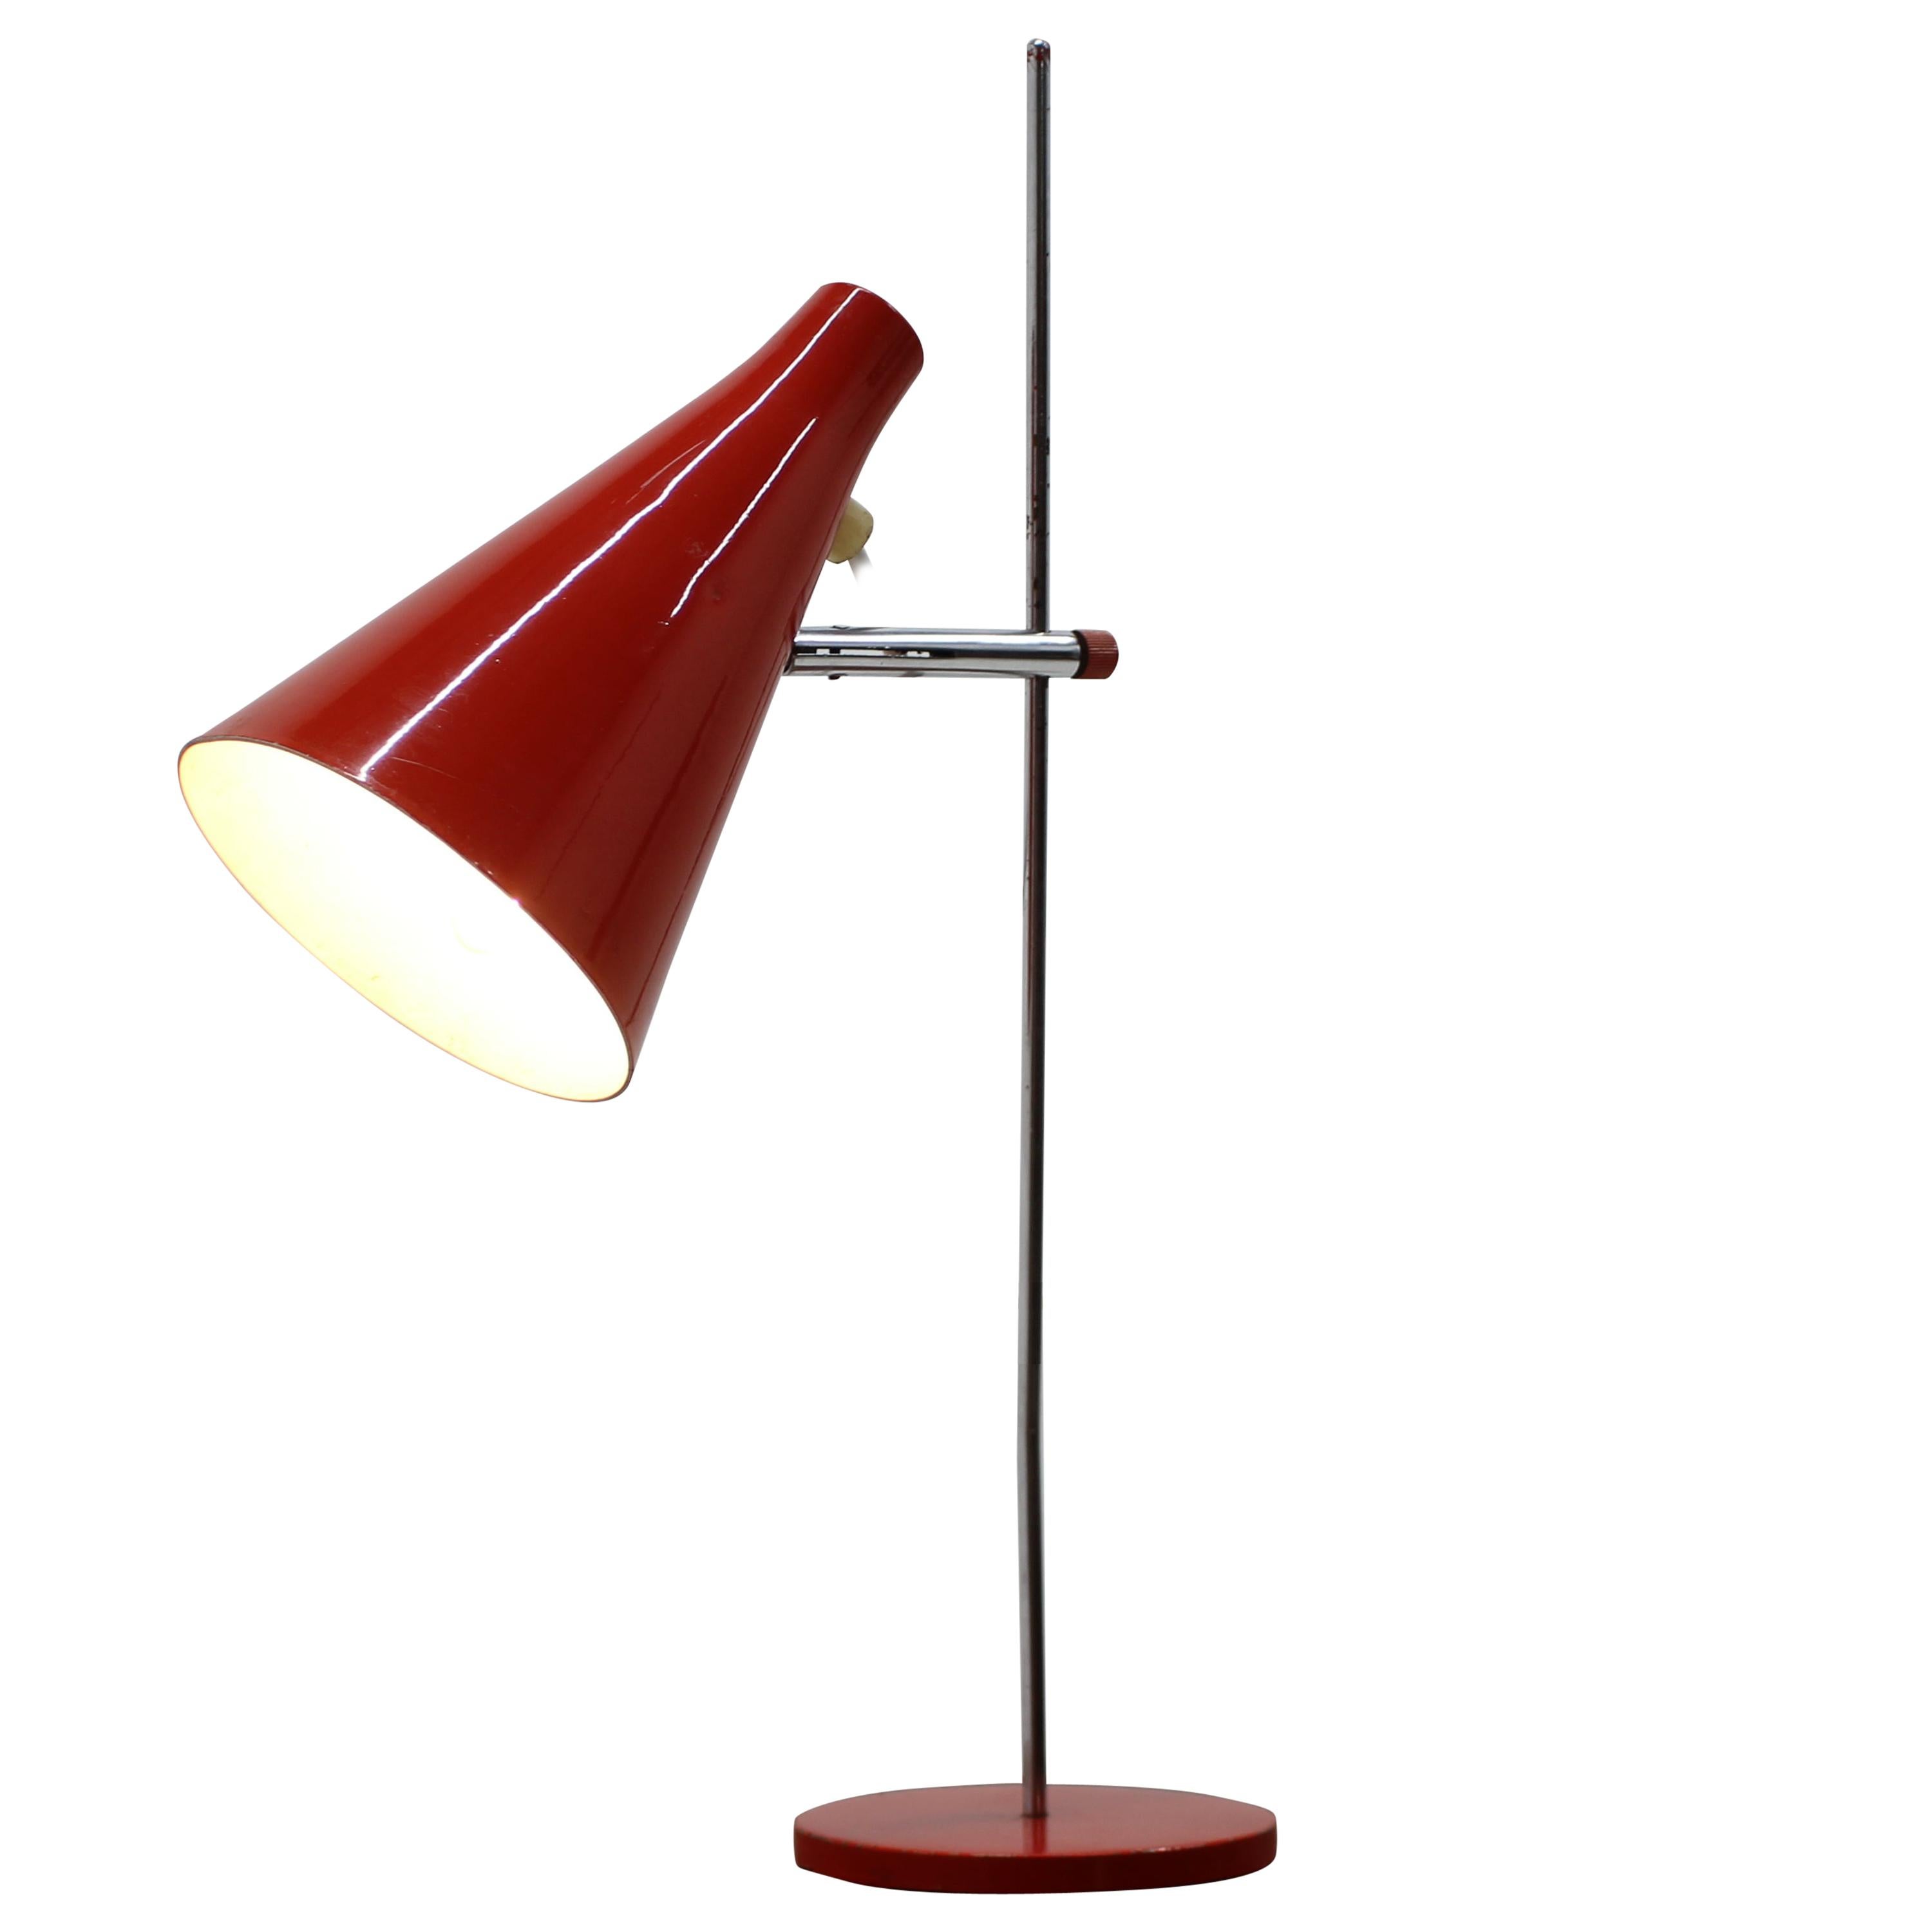 Midcentury Design Table Lamp by Josef Hurka, 1960s